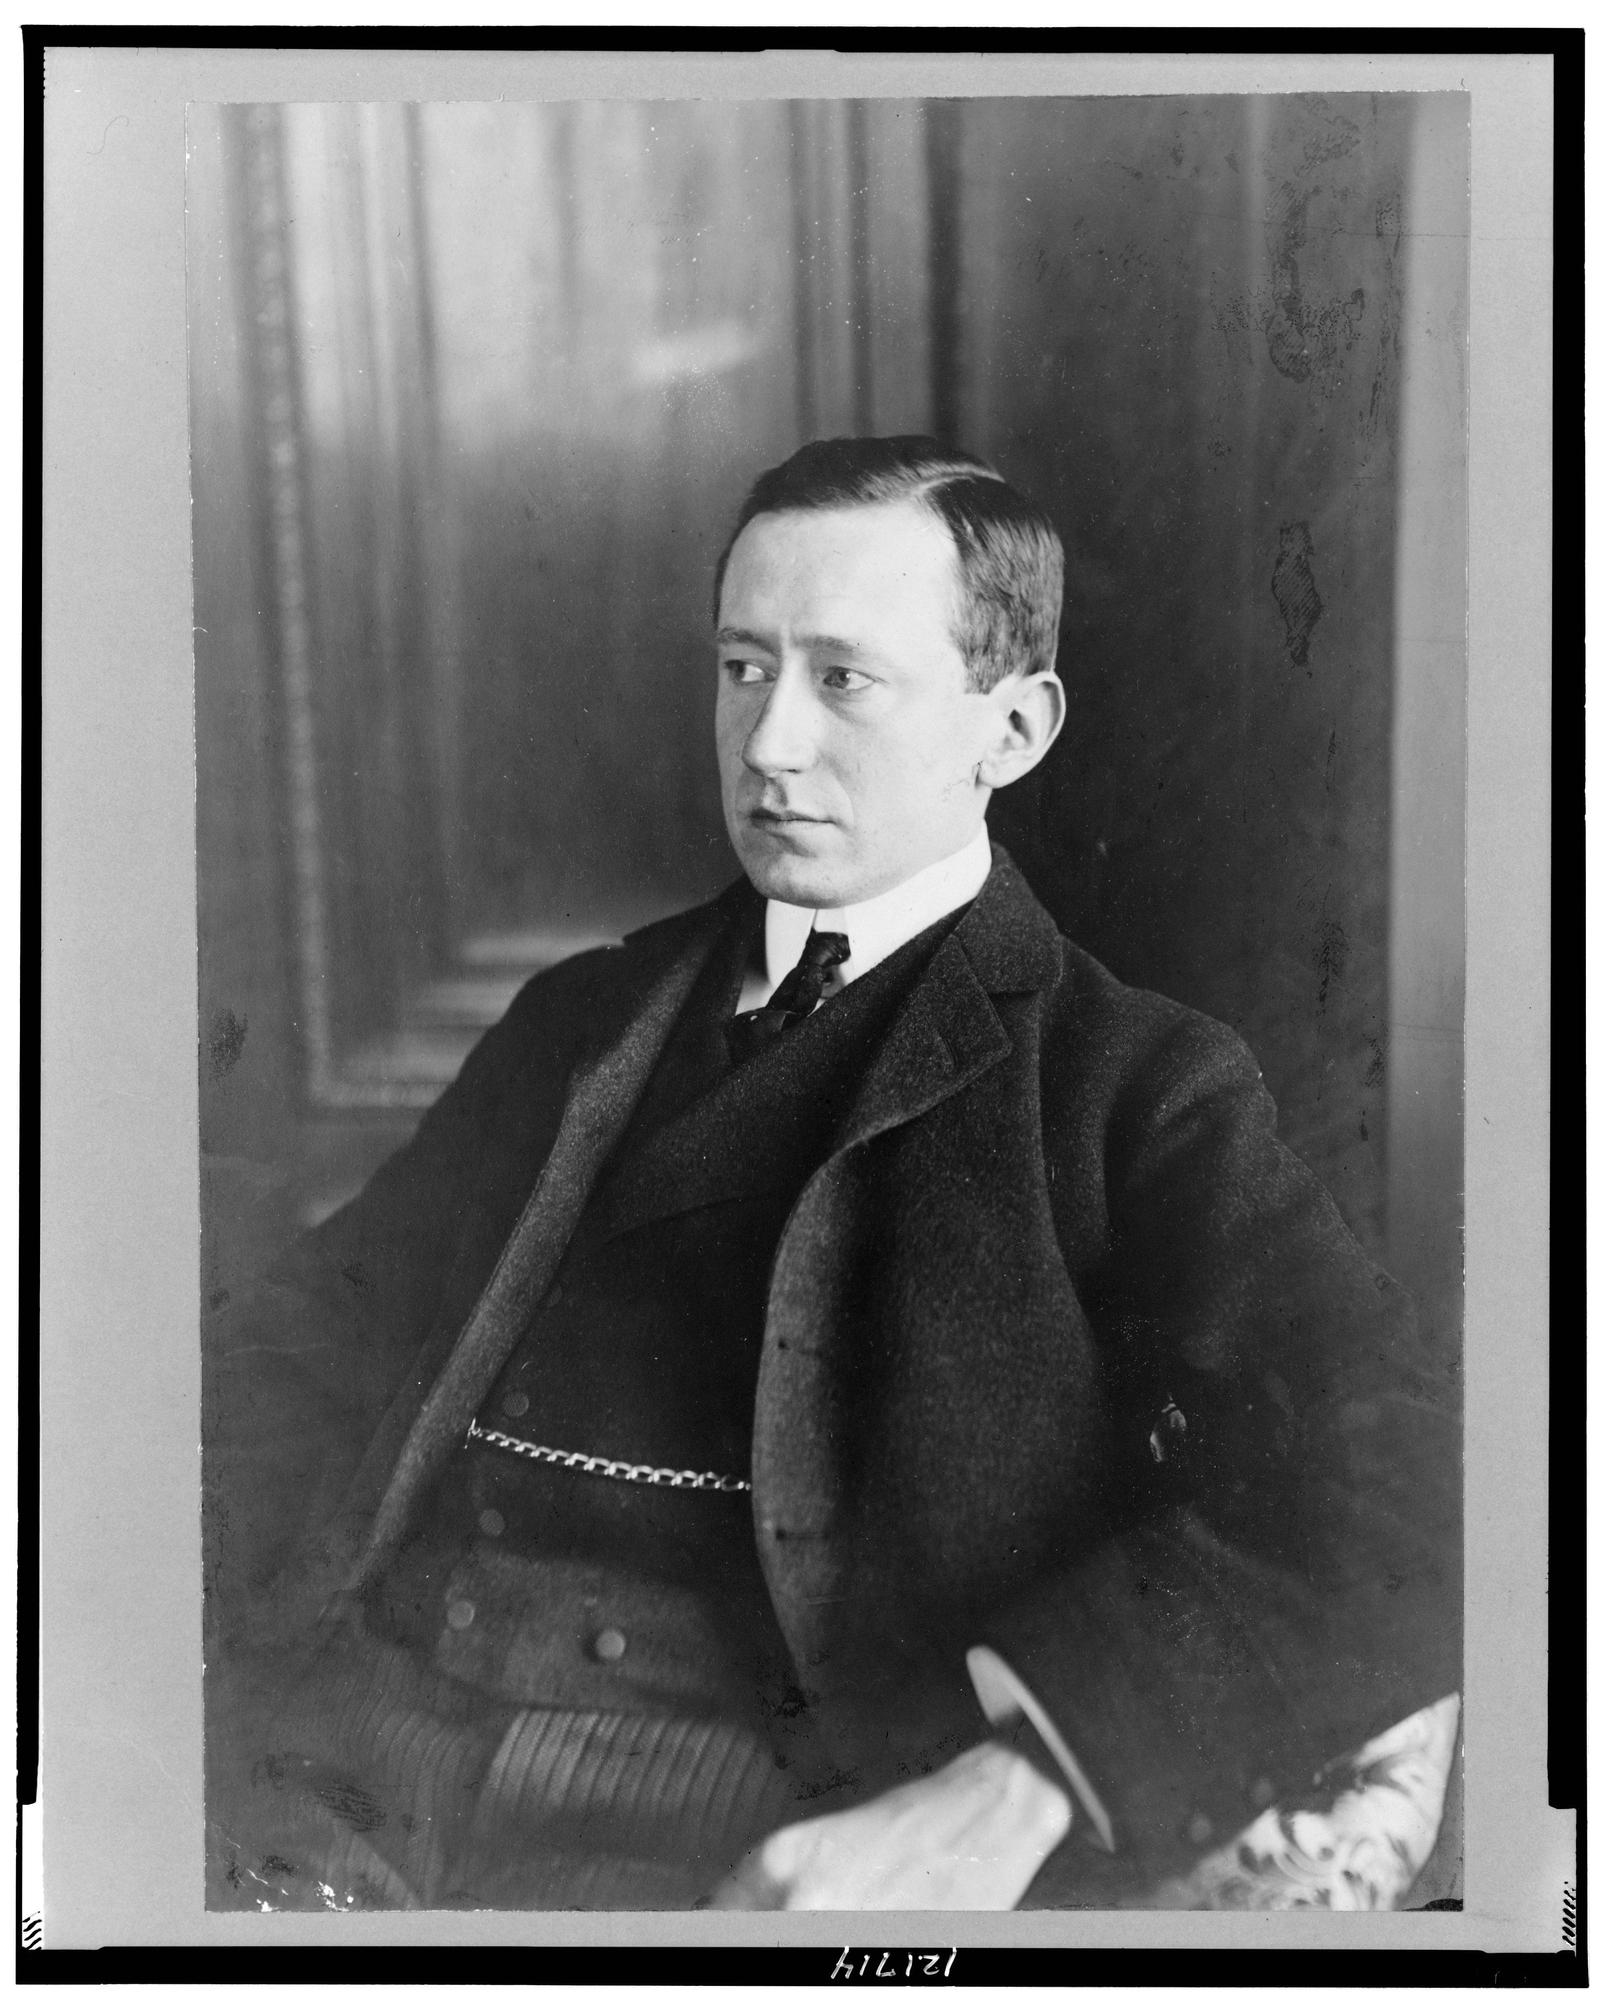 Guillermo Marconi - Inventor (1928)